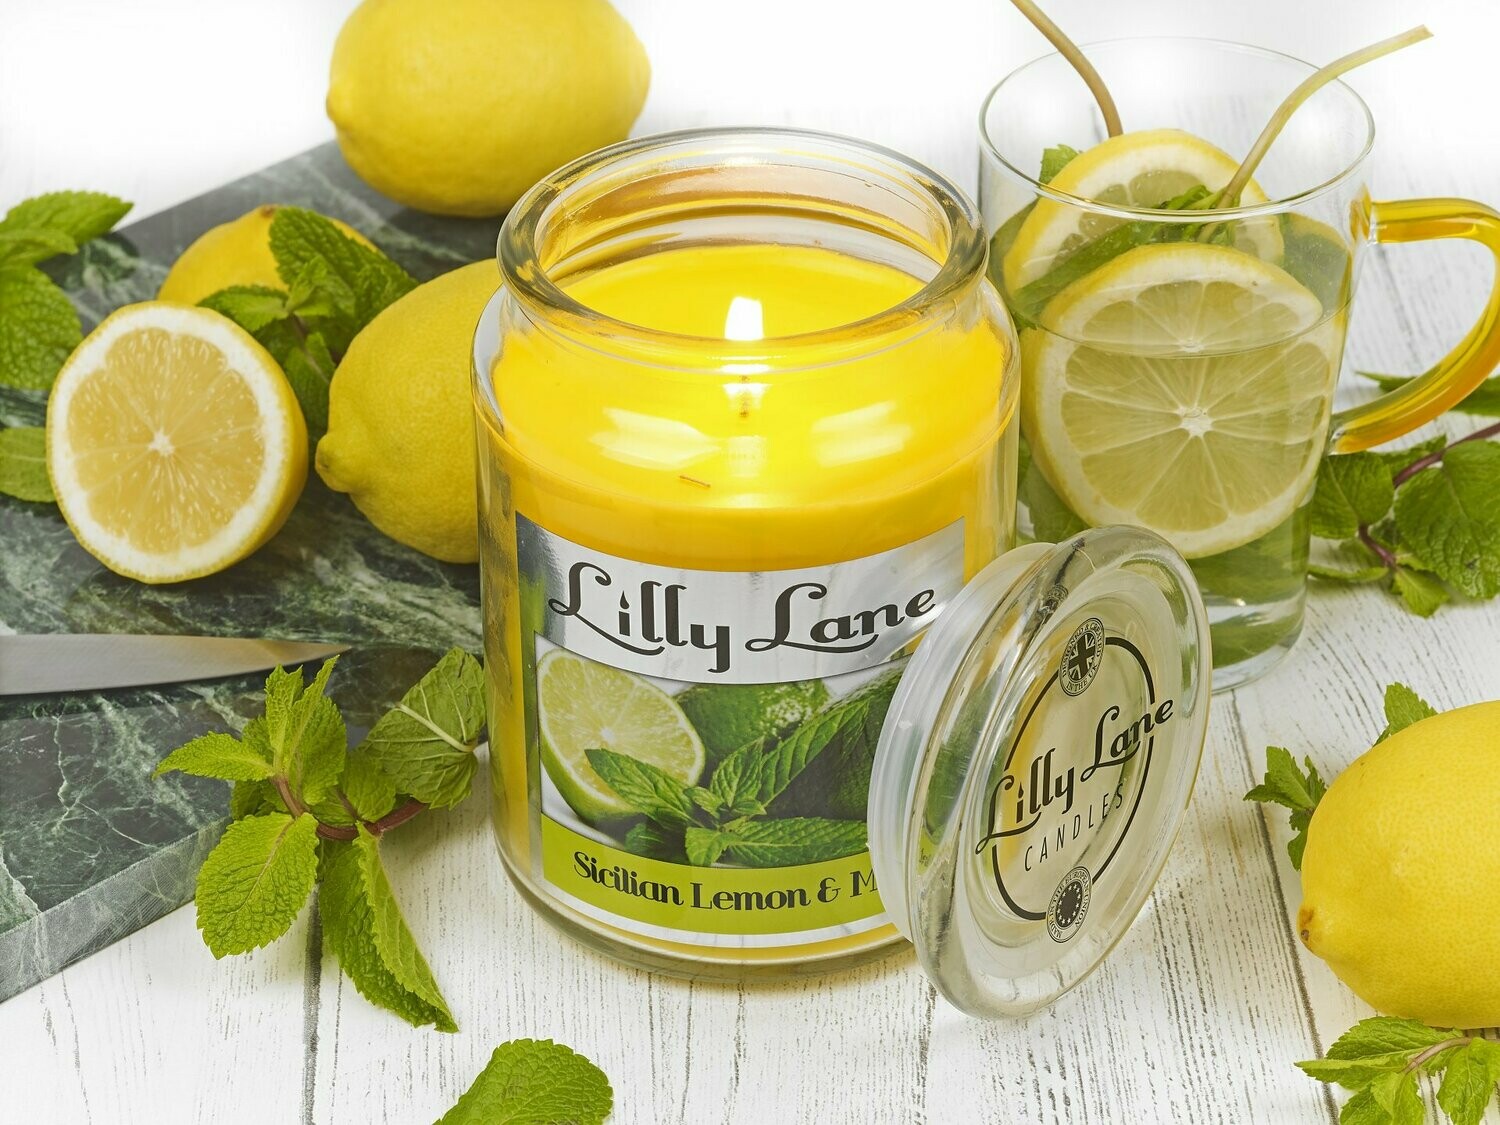 Lilly Lane Sicilian Lemon & Mint 18oz Jar Candle